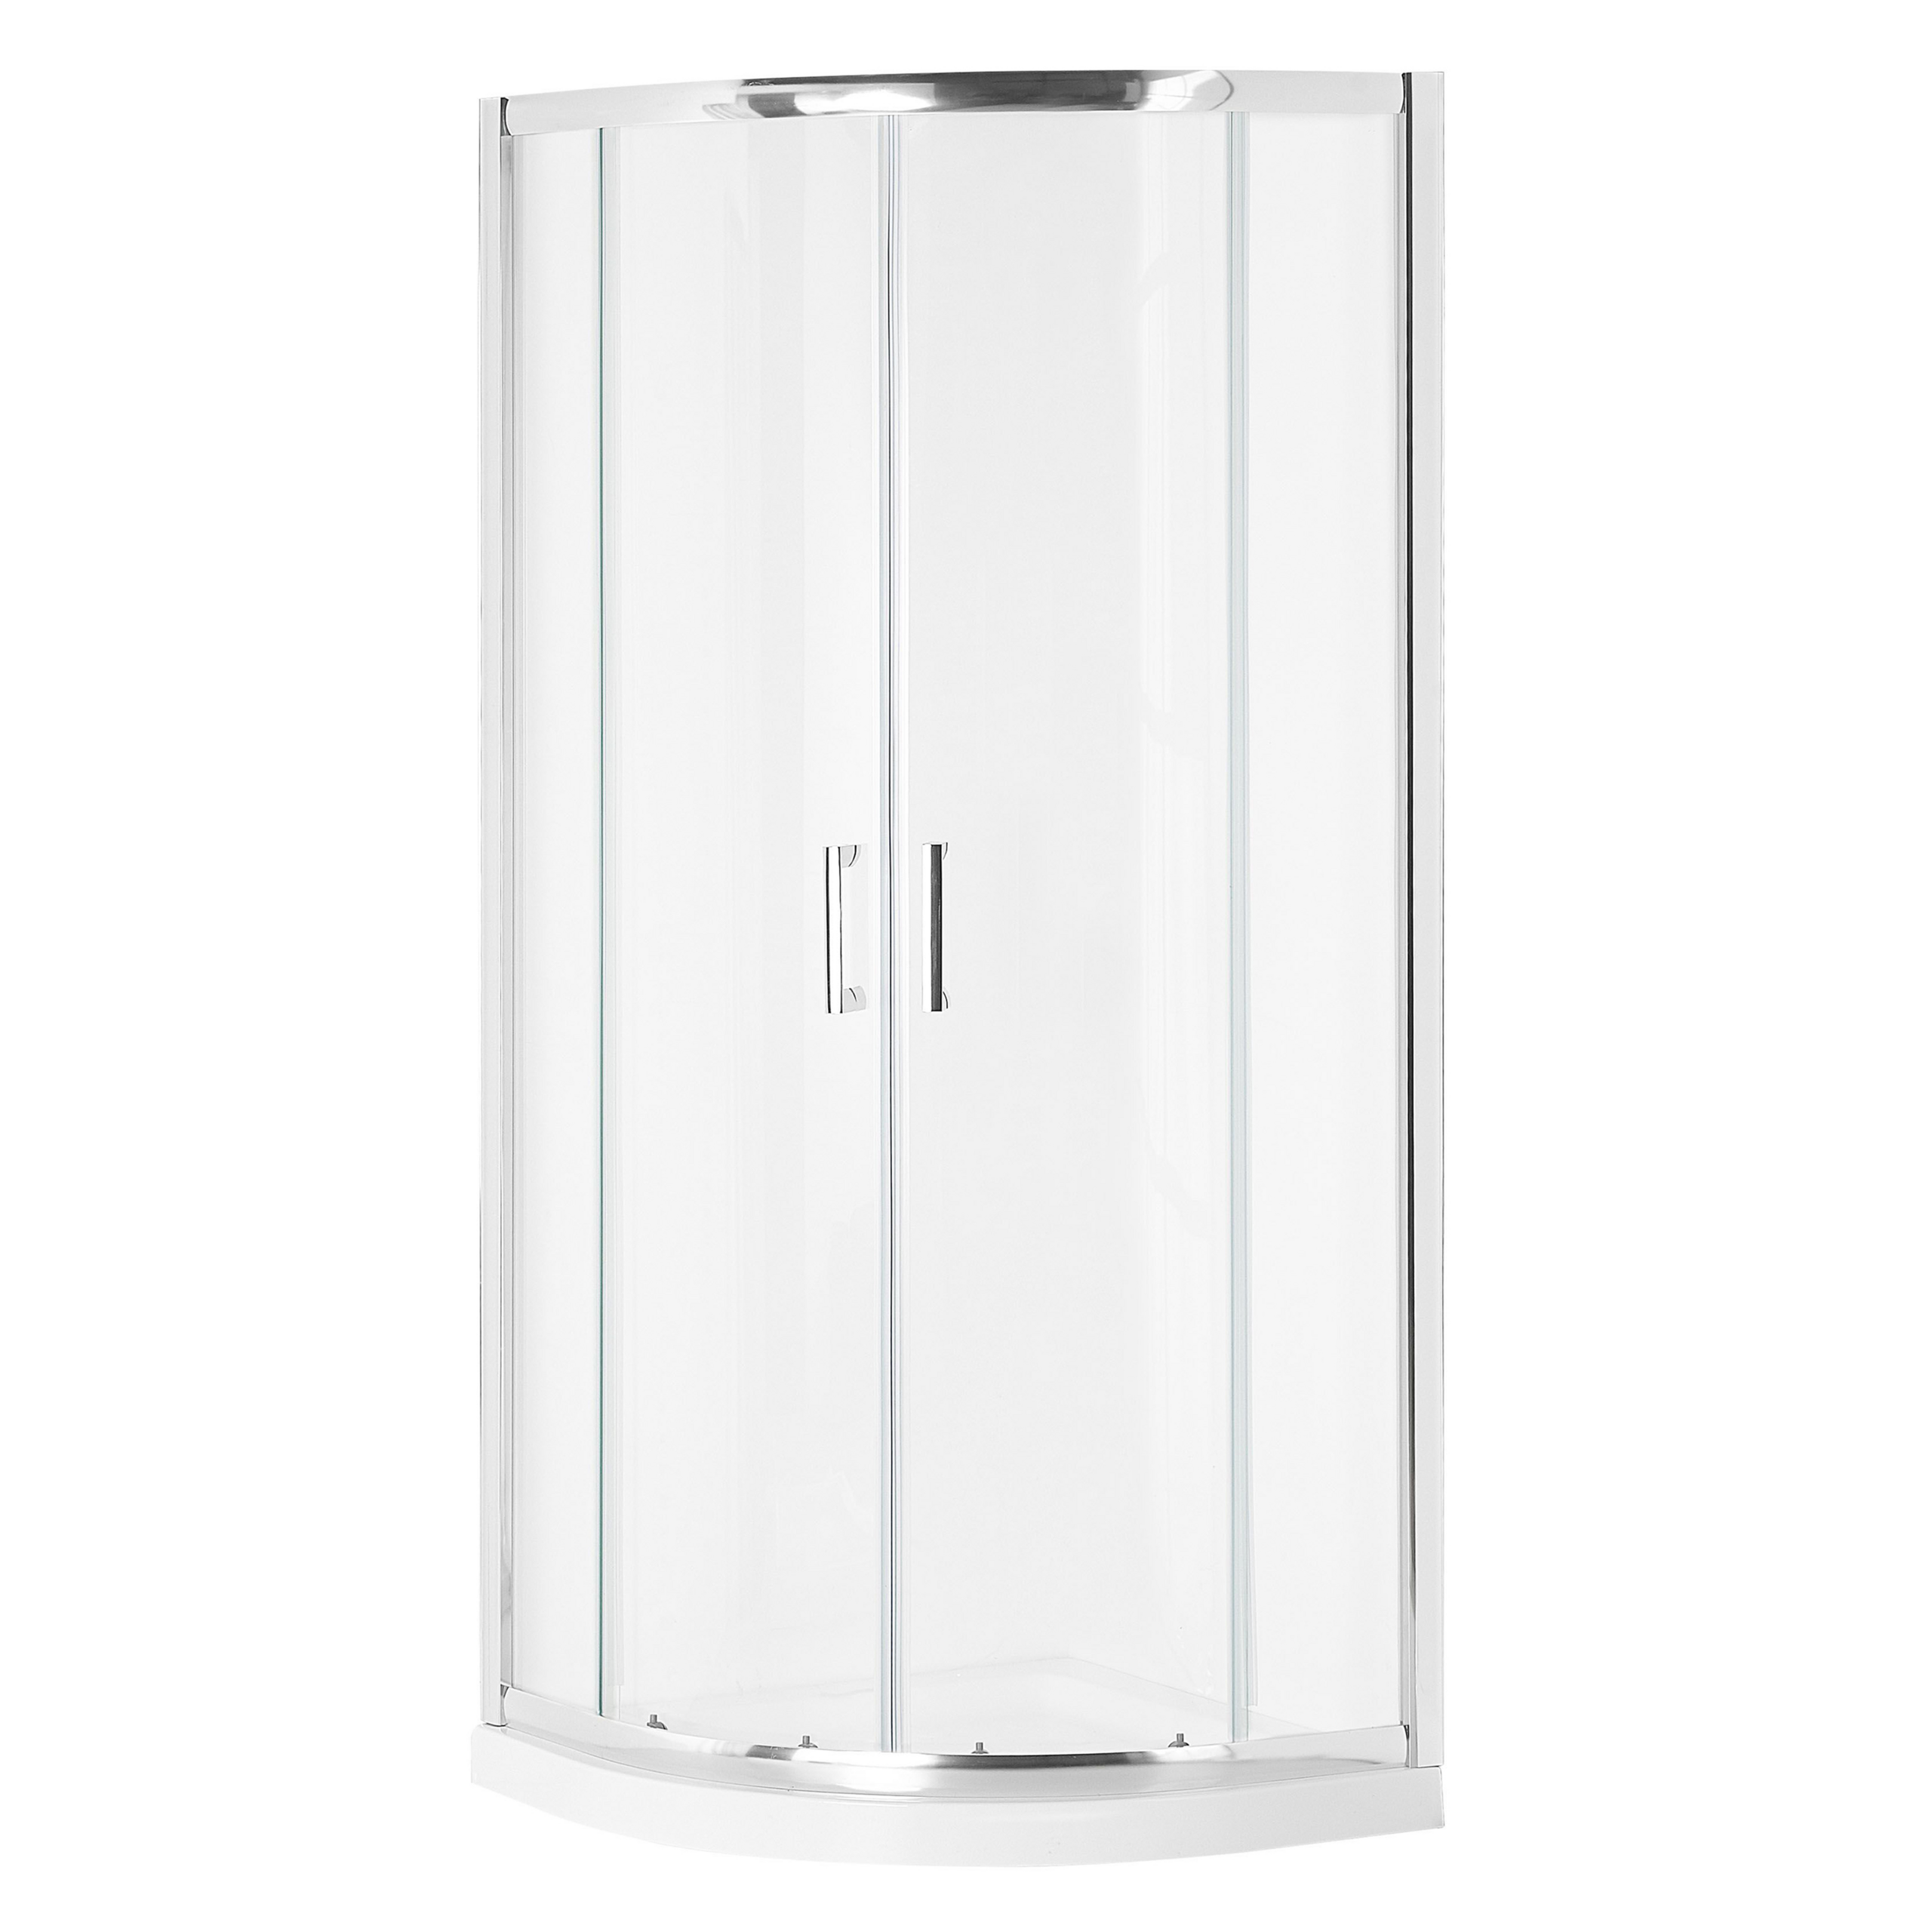 Beliani Shower Enclosure Silver Tempered Glass Aluminum Frame Double Door Half Round 80x80x185cm Modern Design